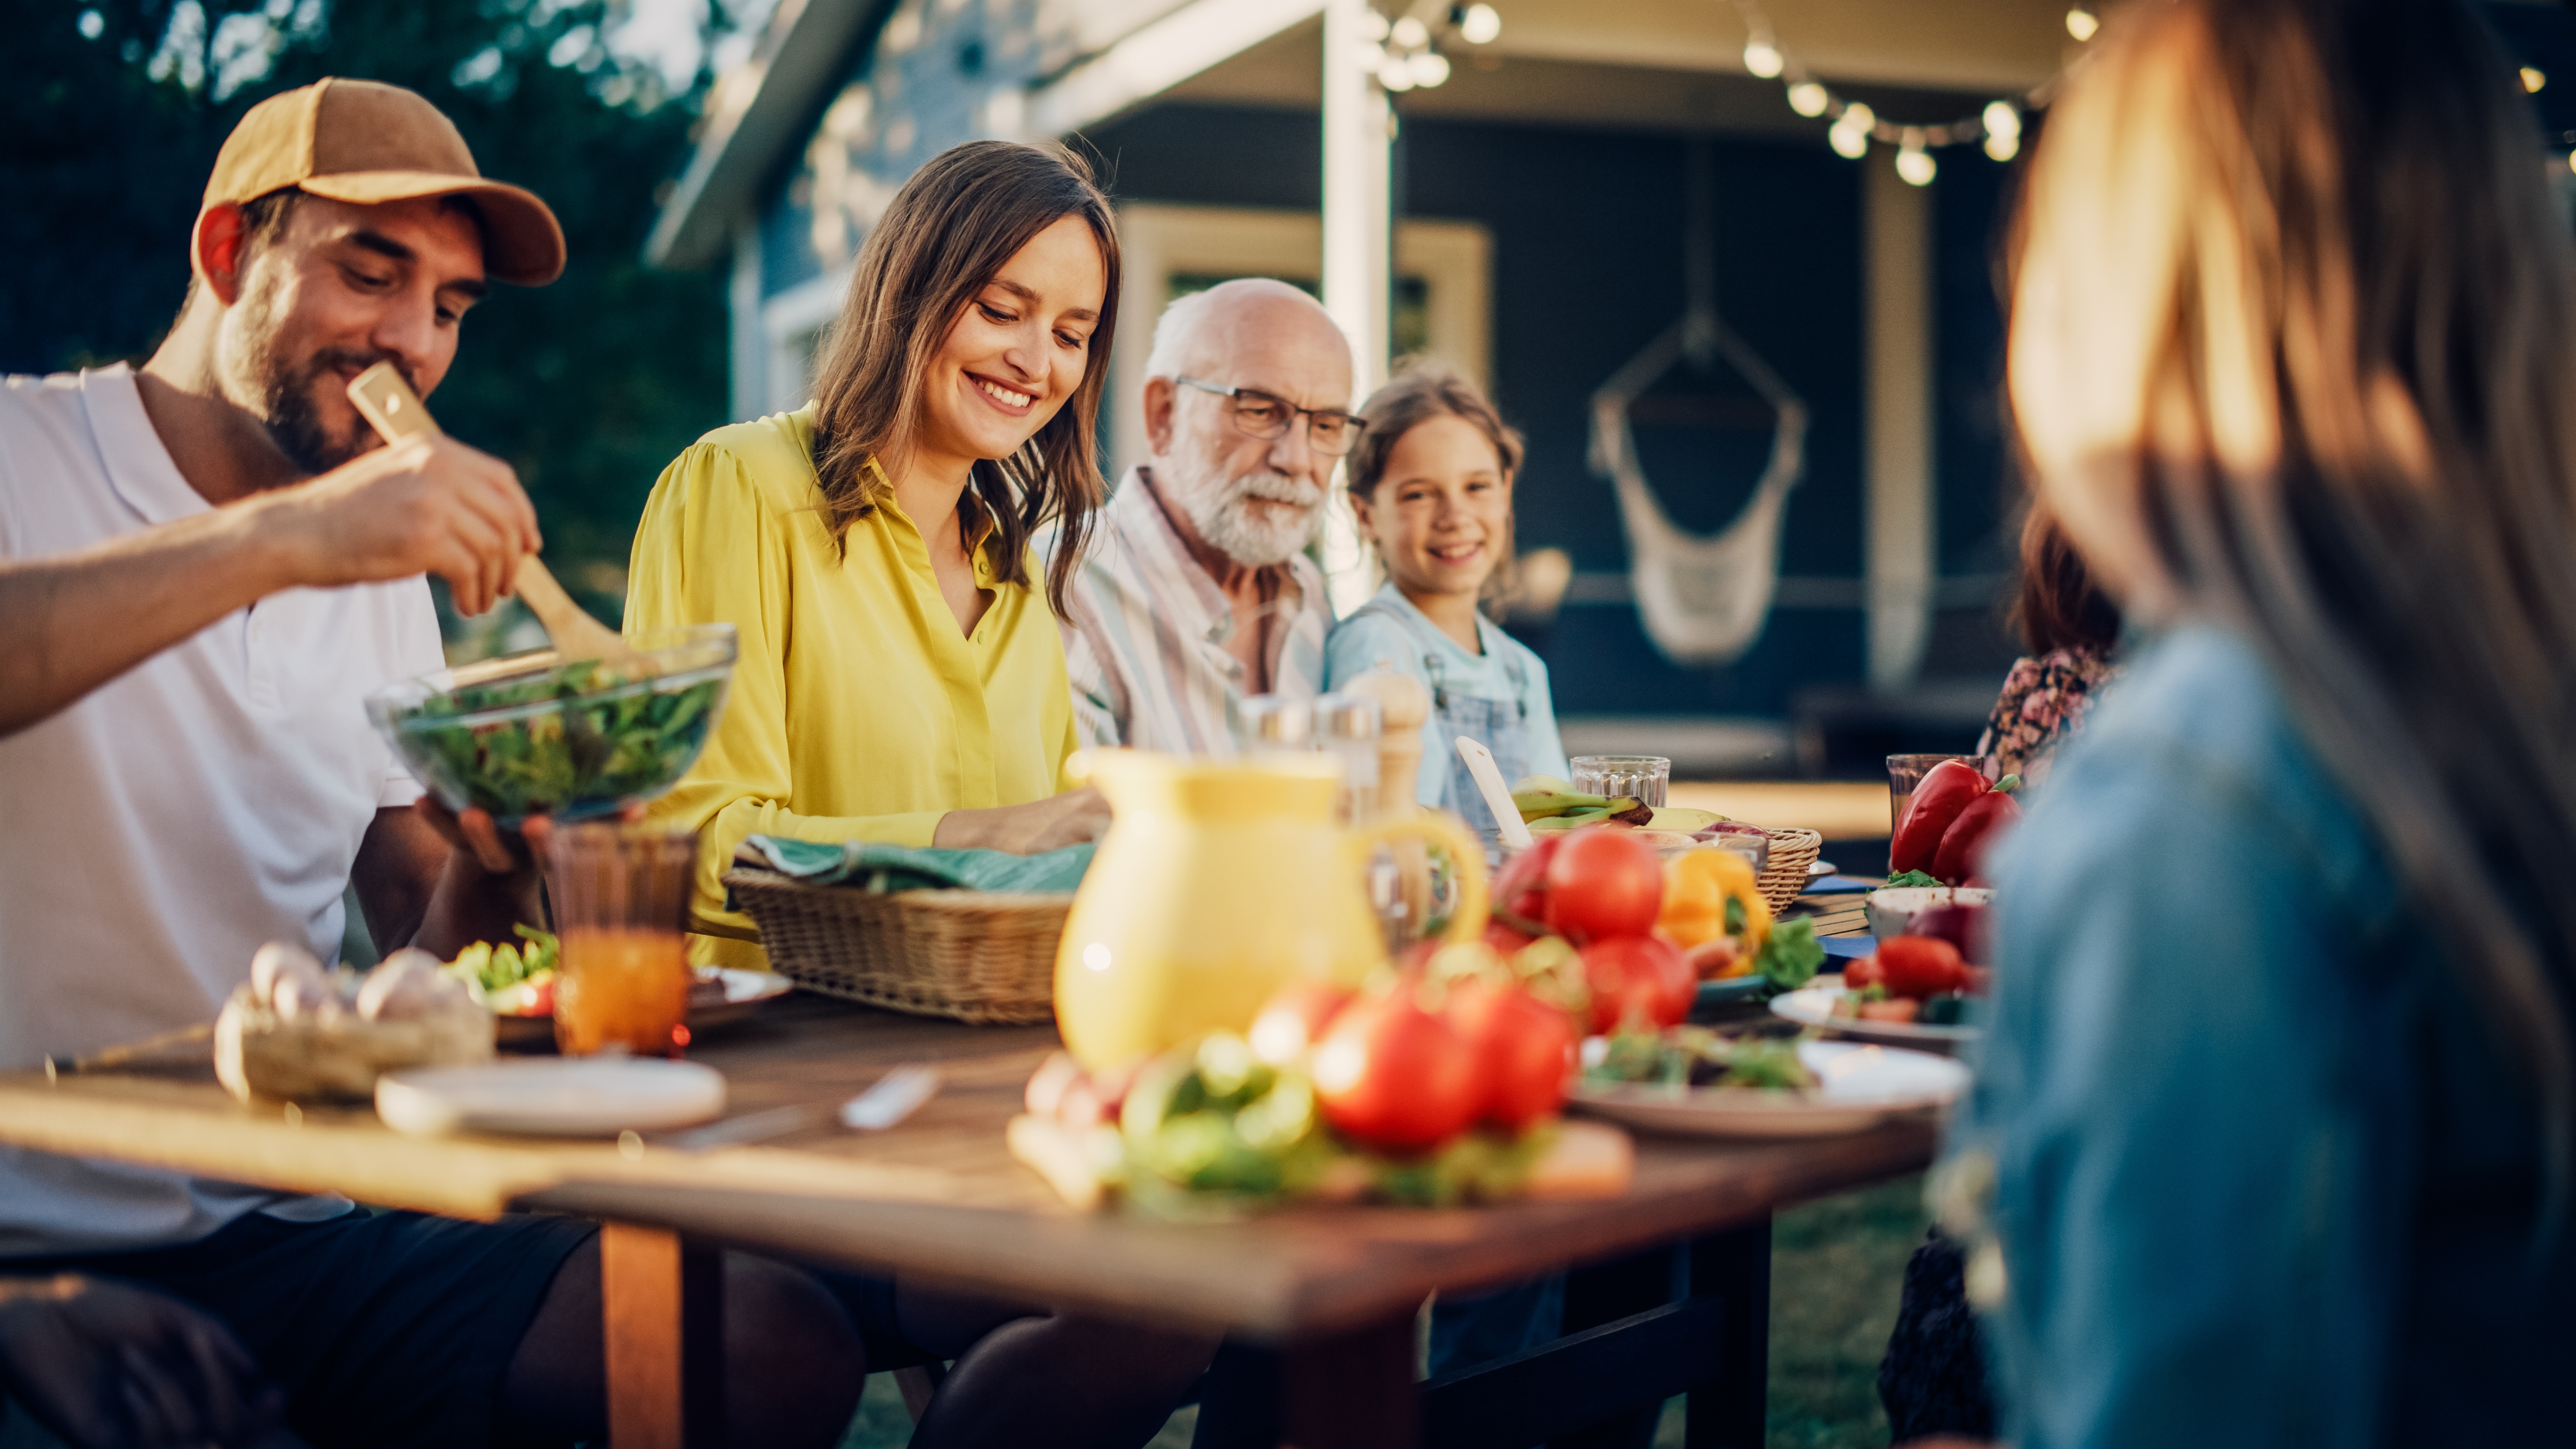 A family enjoying a meal | Source: Shutterstock